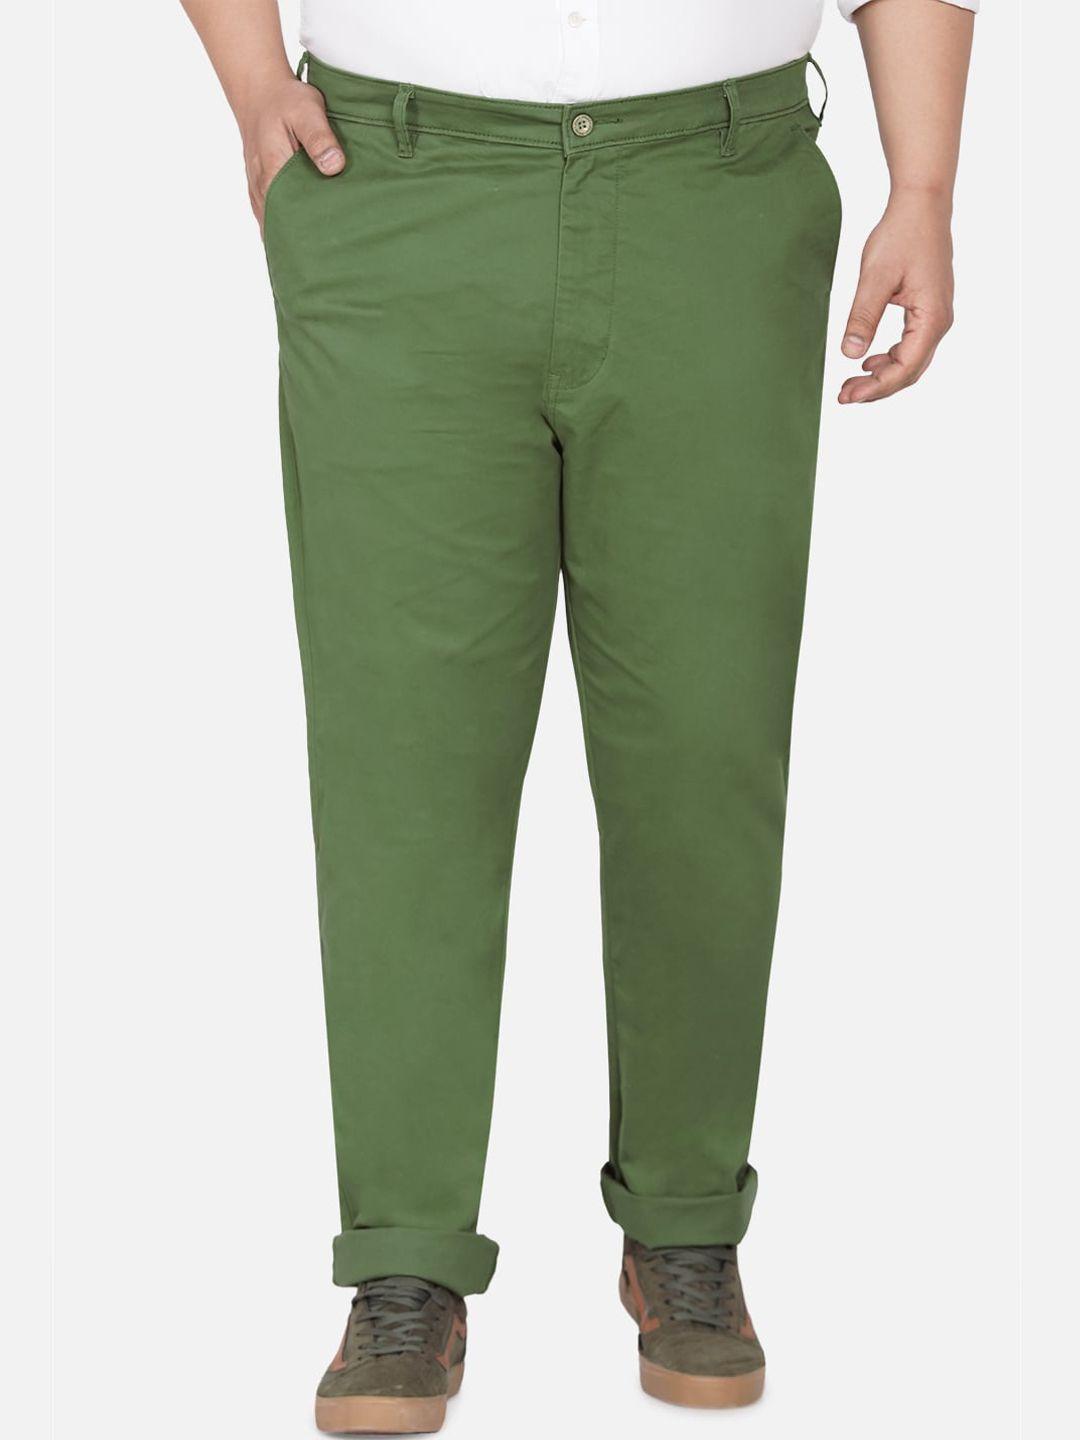 john-pride-men-olive-green-trousers